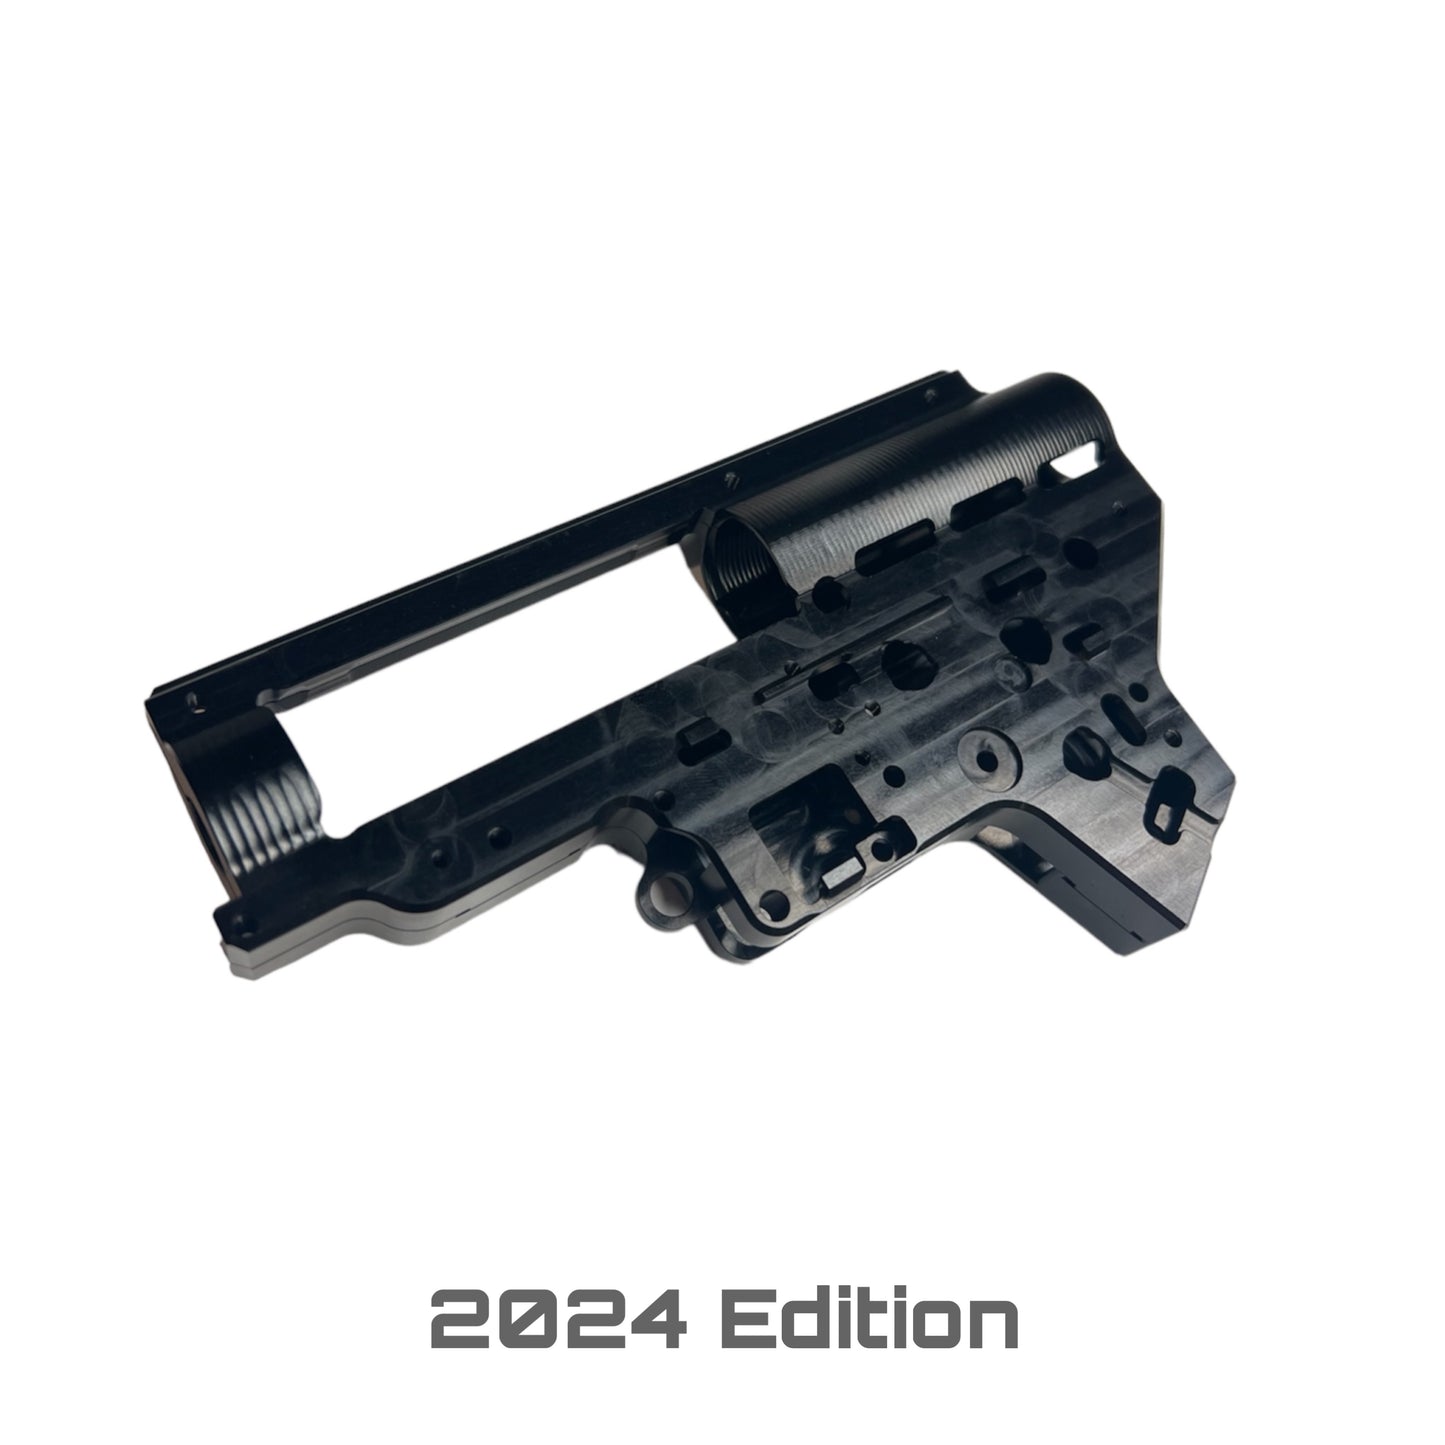 Retro Arms CNC Gearbox V2 (8mm) – QSC